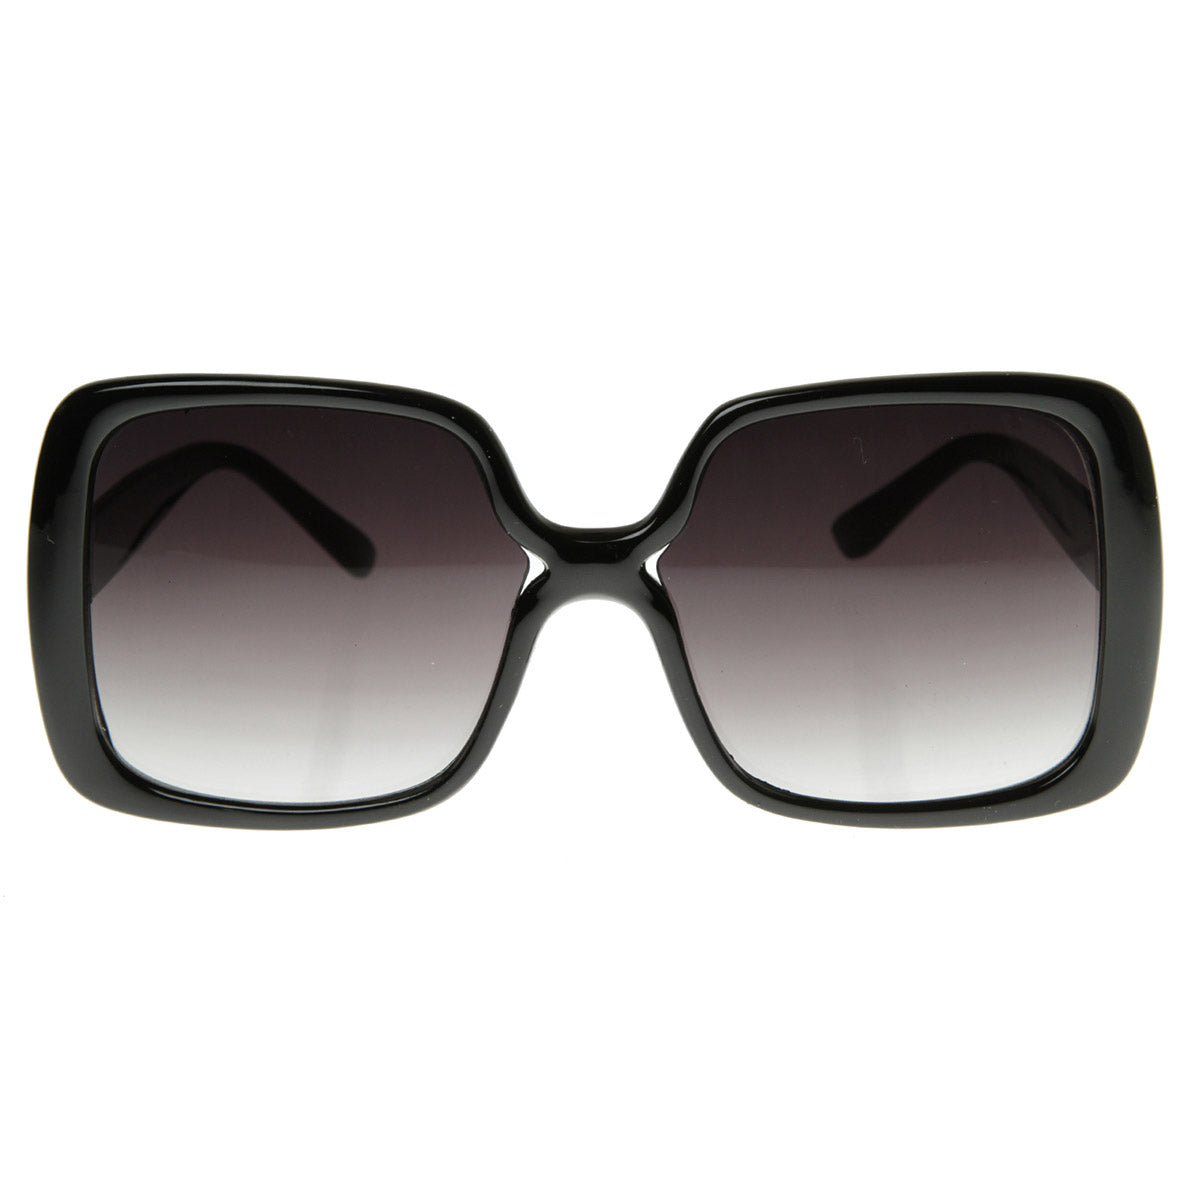 Shop Ashley smoke/heart Vintage Rimless Sunglasses for Men